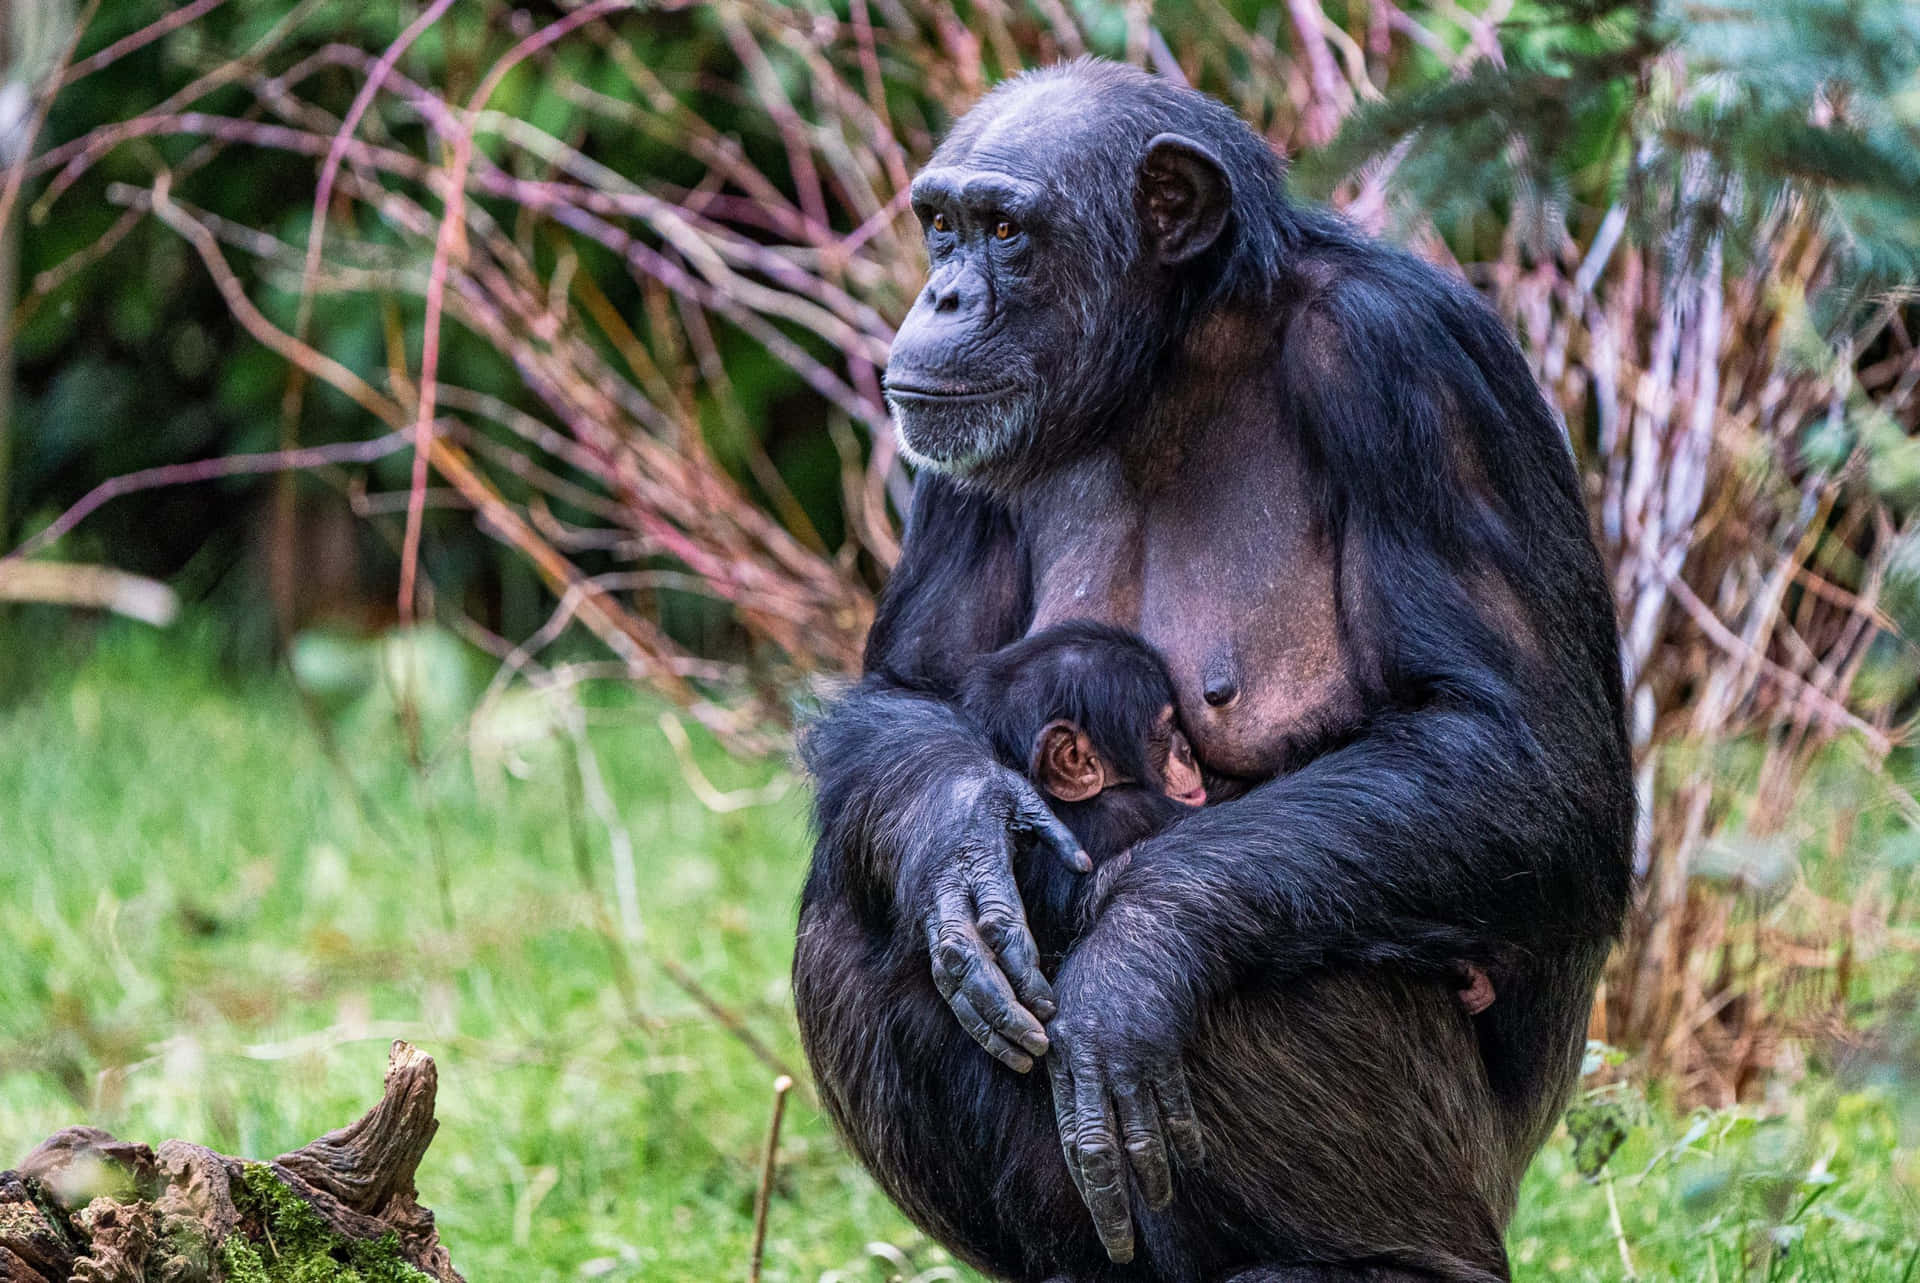 A Chimpanzee admiring its own reflection